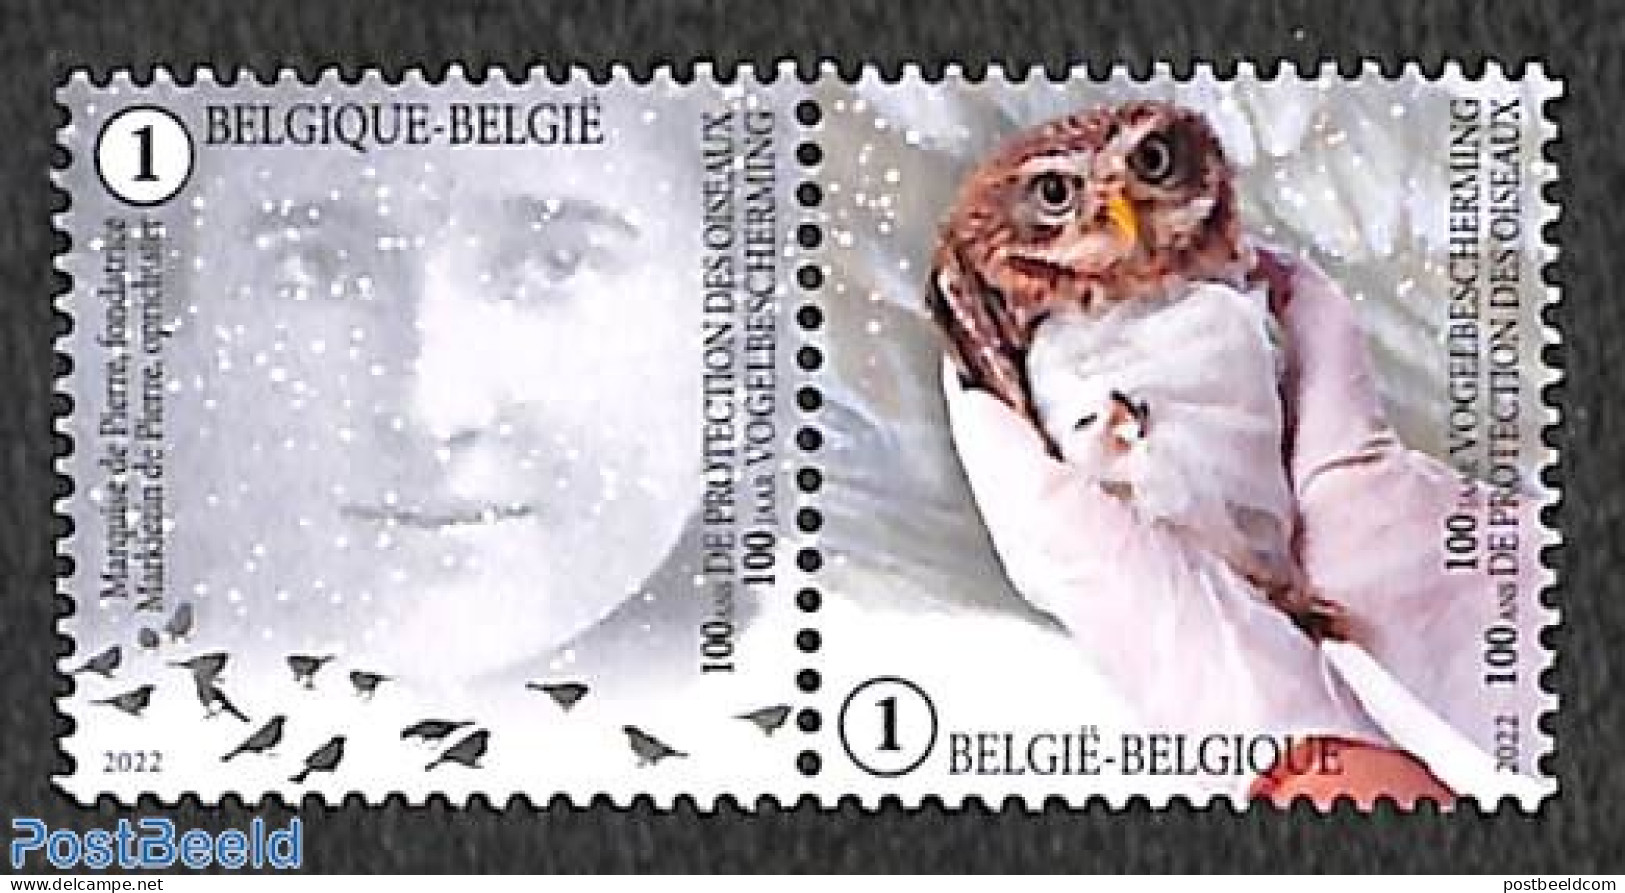 Belgium 2022 Bird Protection 2v [:], Mint NH, Nature - Birds - Owls - Neufs